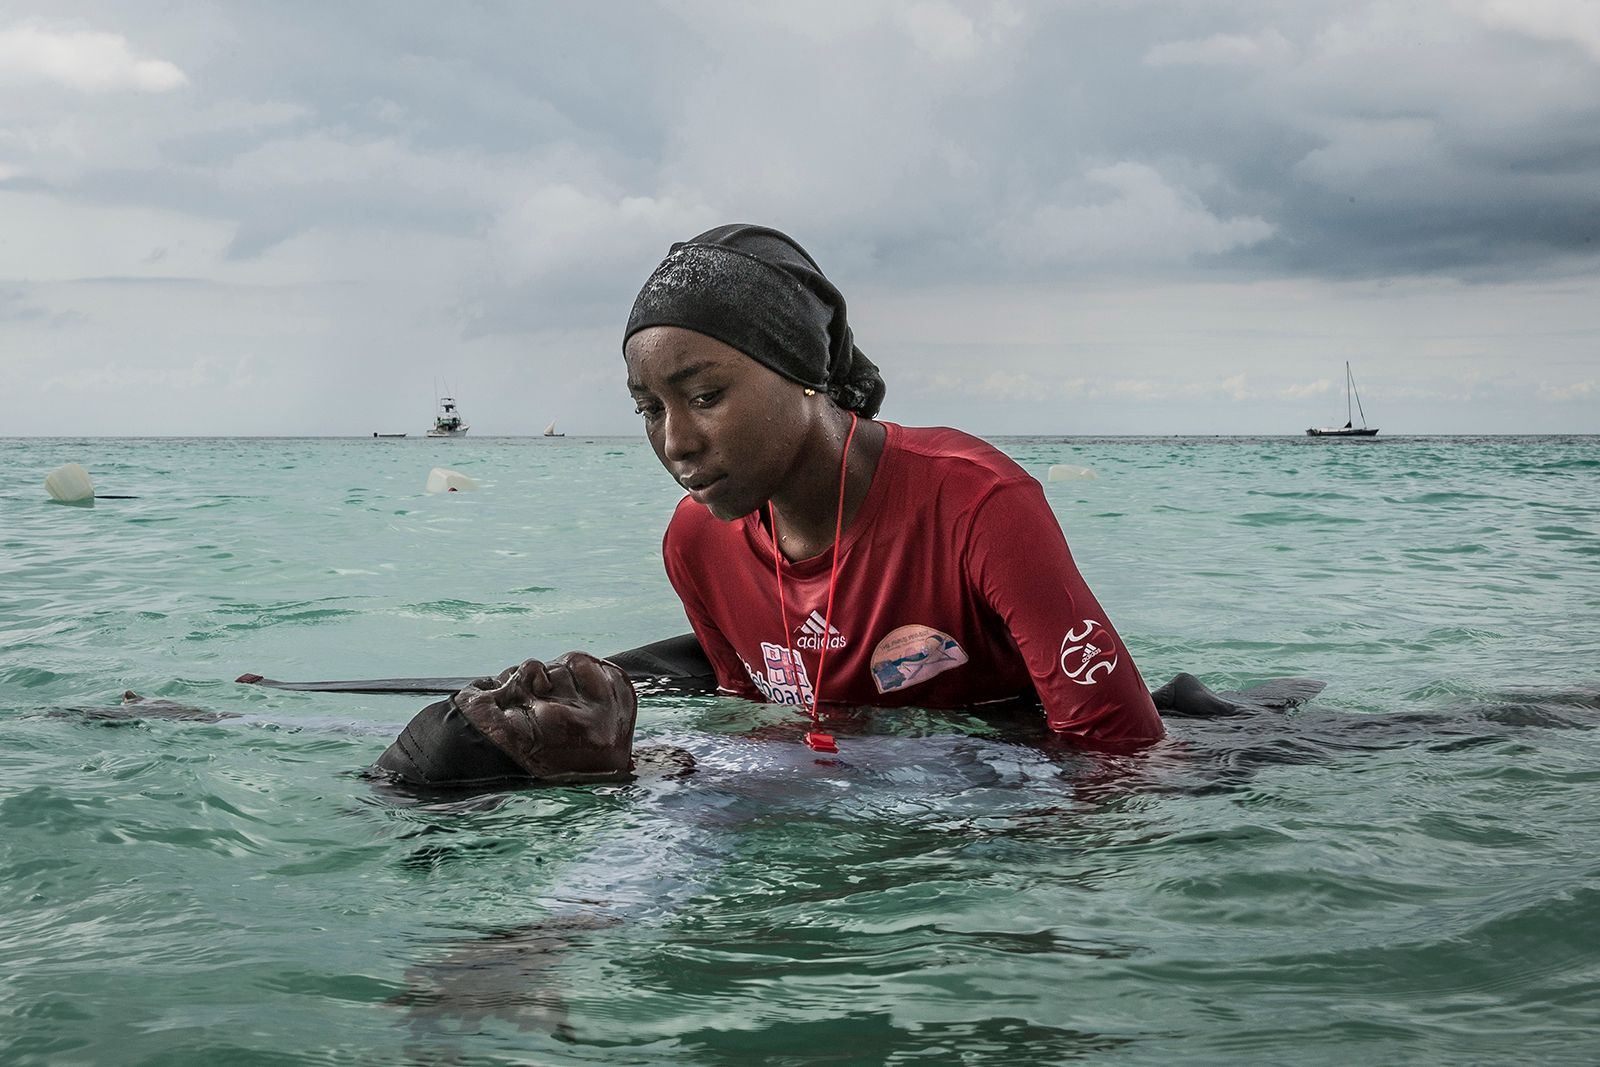 © Anna Boyiazis - Swim instructor Siti, 24, helps a girl float in the Indian Ocean off of Nungwi, Zanzibar.